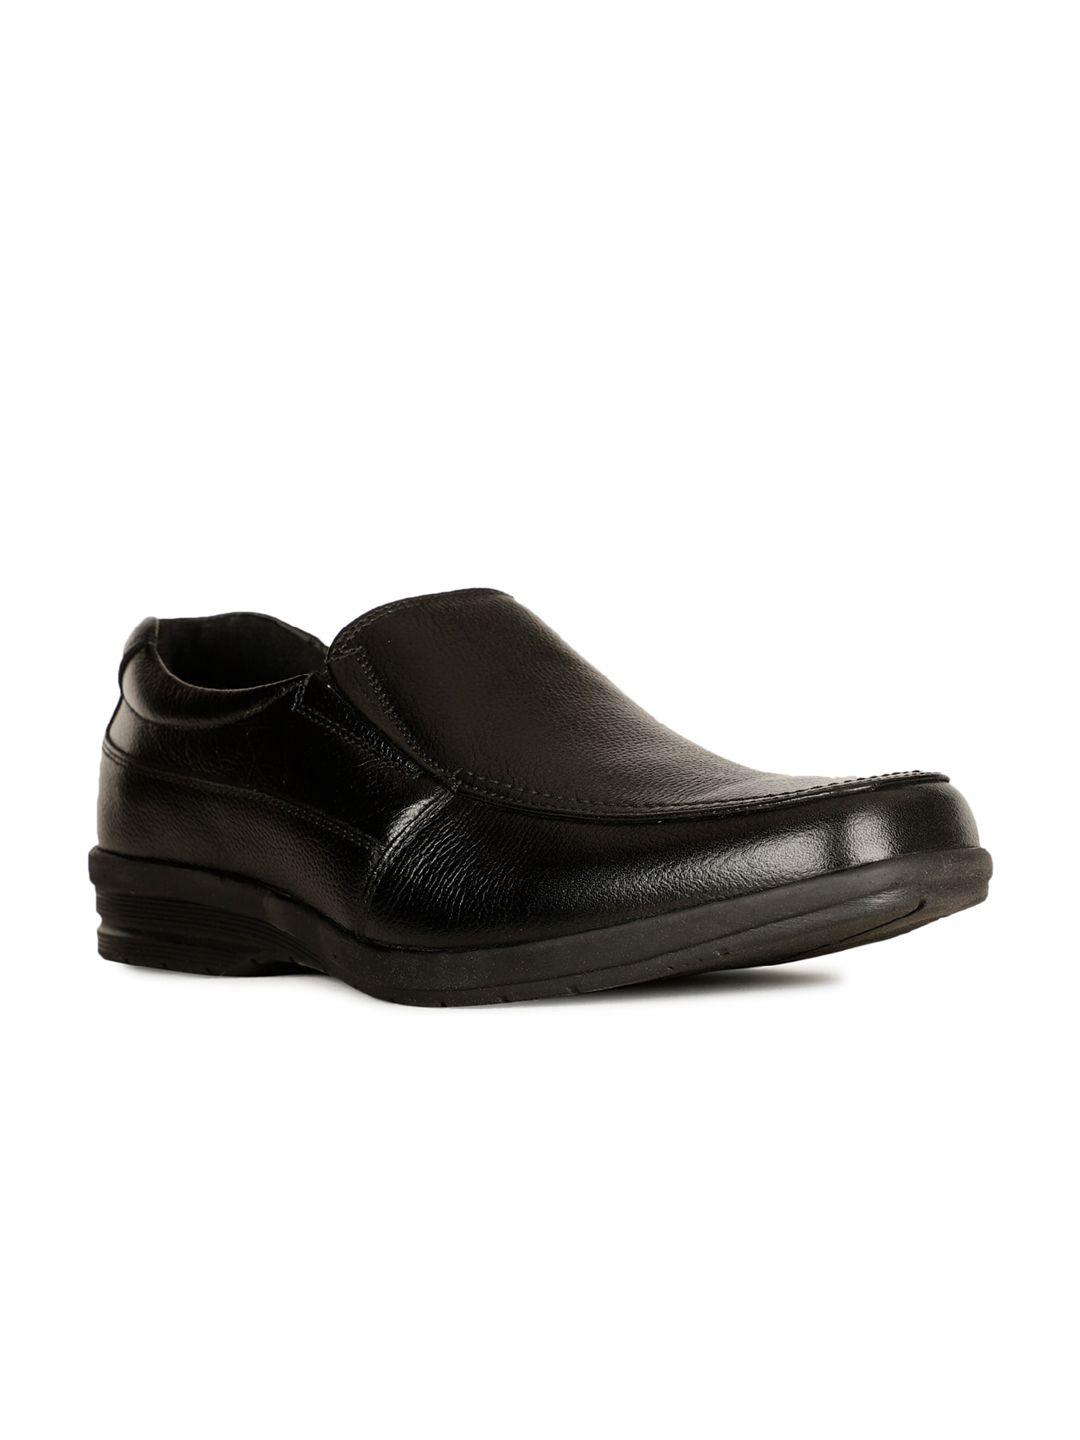 bata-men-textured-leather-formal-slip-on-shoes